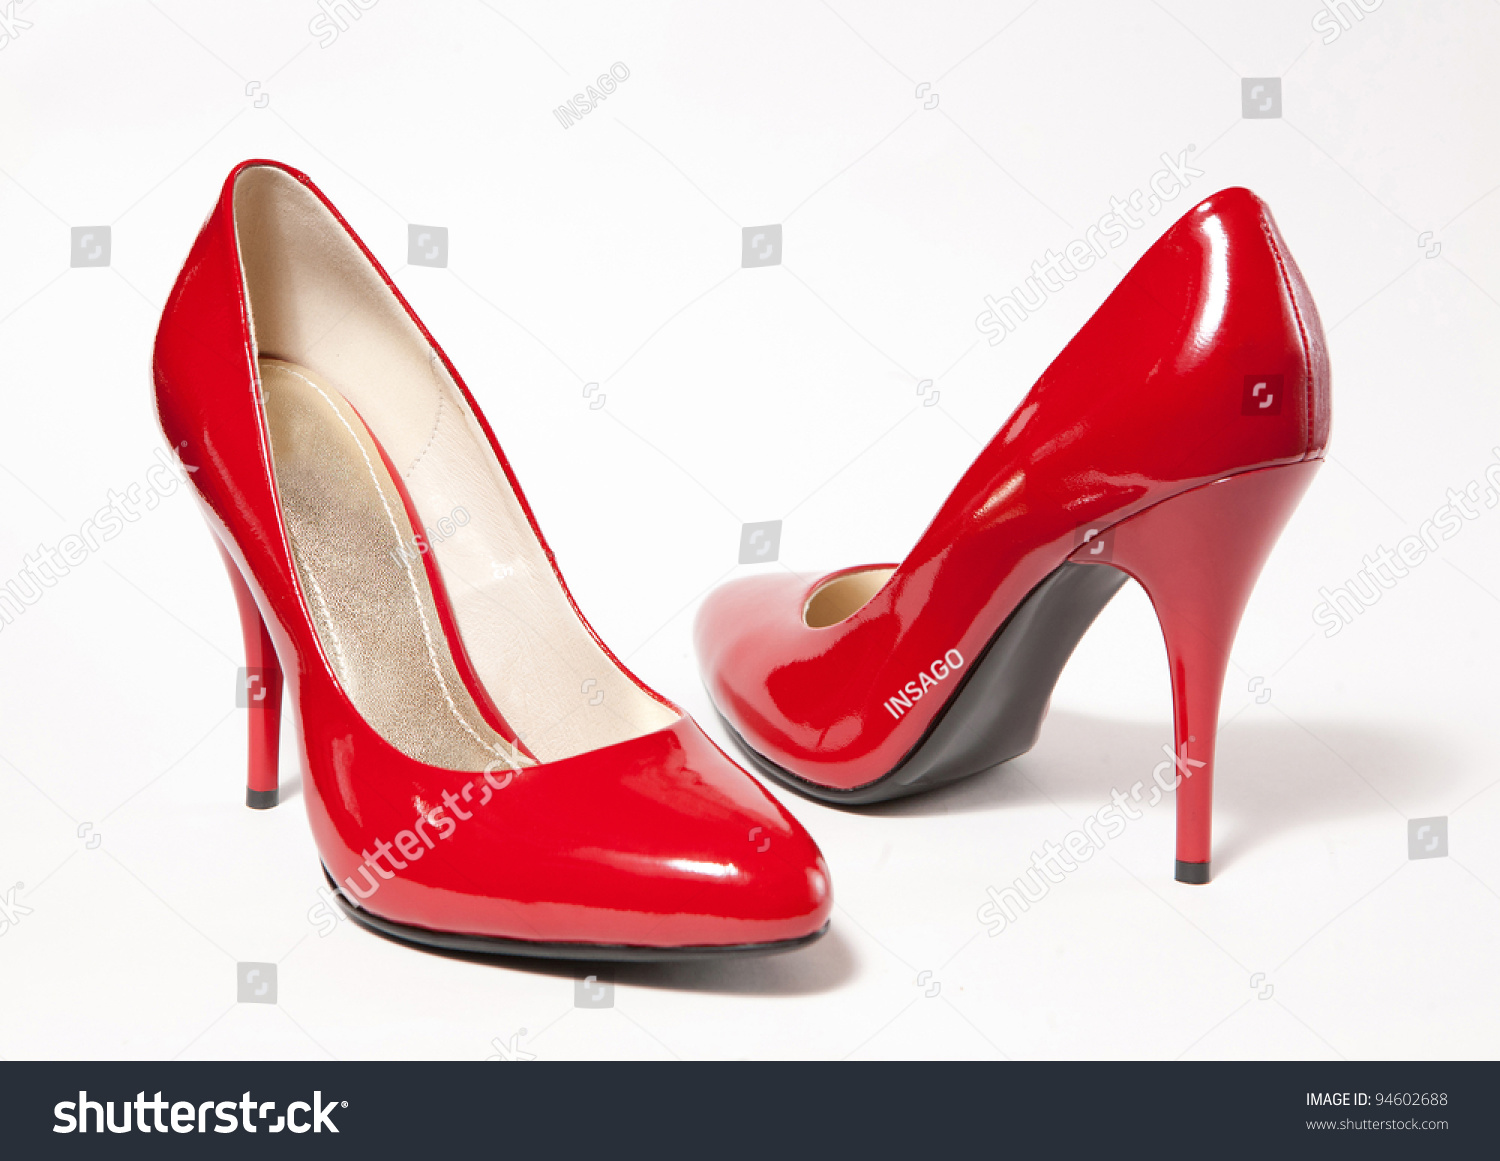 Red High Heel Women Shoes On Stock Photo 94602688 - Shutterstock